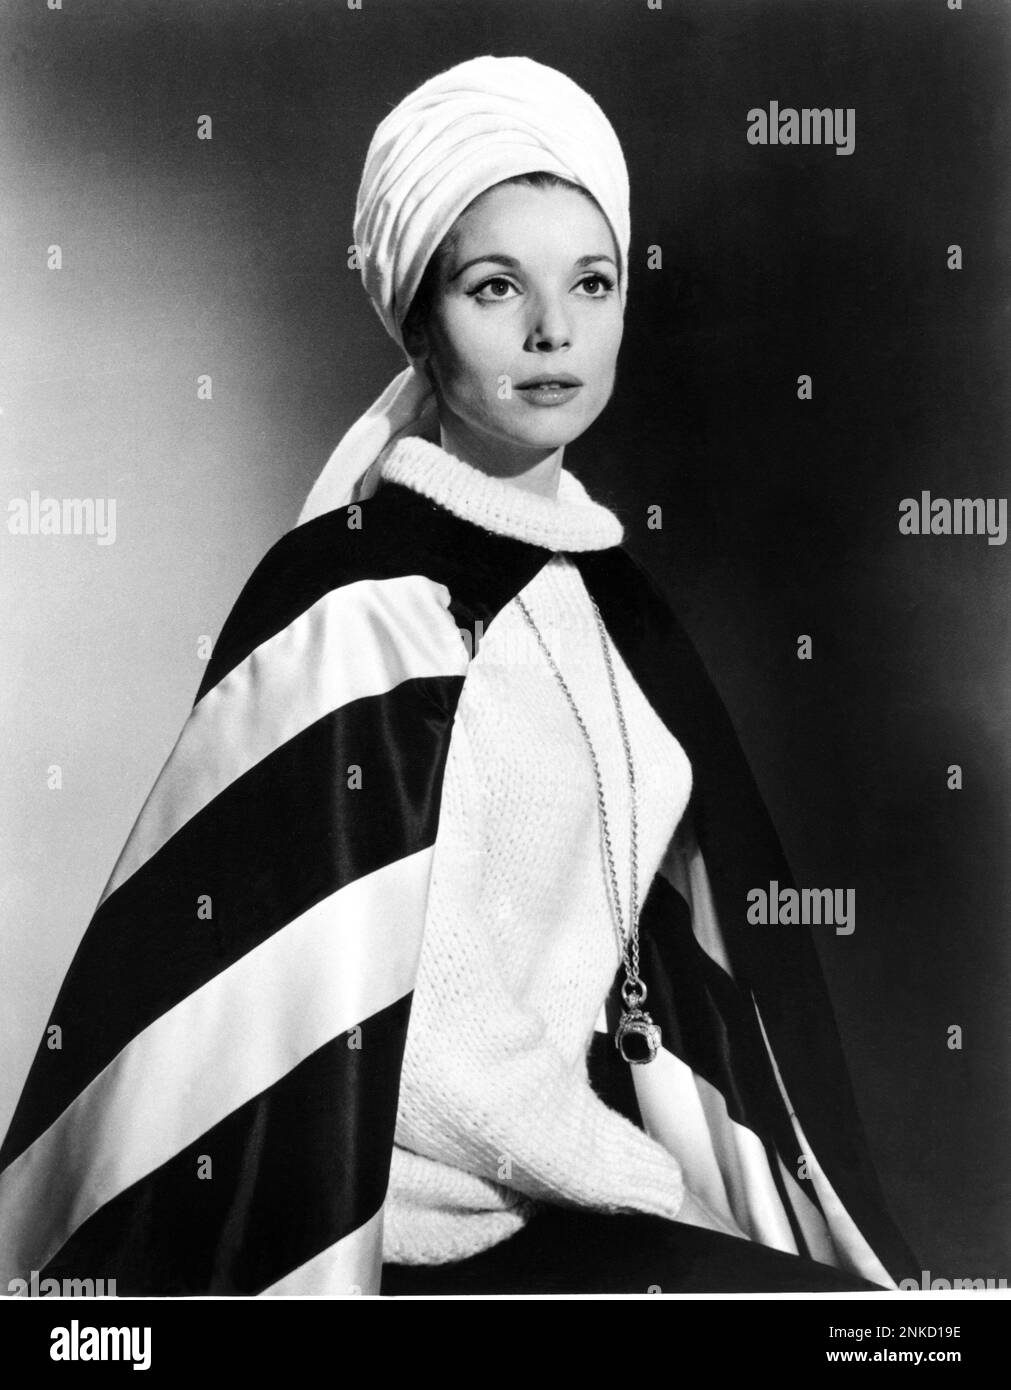 1963 , USA  : The italian actress ELSA MARTINELLI ( born in Rome , Italy , 1935 ) in Hollywood productions , pubblicity still for the movie THE V.I.P.s by Anthony Asquith , writing by Terence Rattingan  - MOVIE - CINEMA - FILM - portrait - ritratto - turbante - turban - maglione di lana - wool - ciondolo - collana - necklace - mantello - coat - jewels - gioiello - gioielli  ----  Archivio GBB Stock Photo